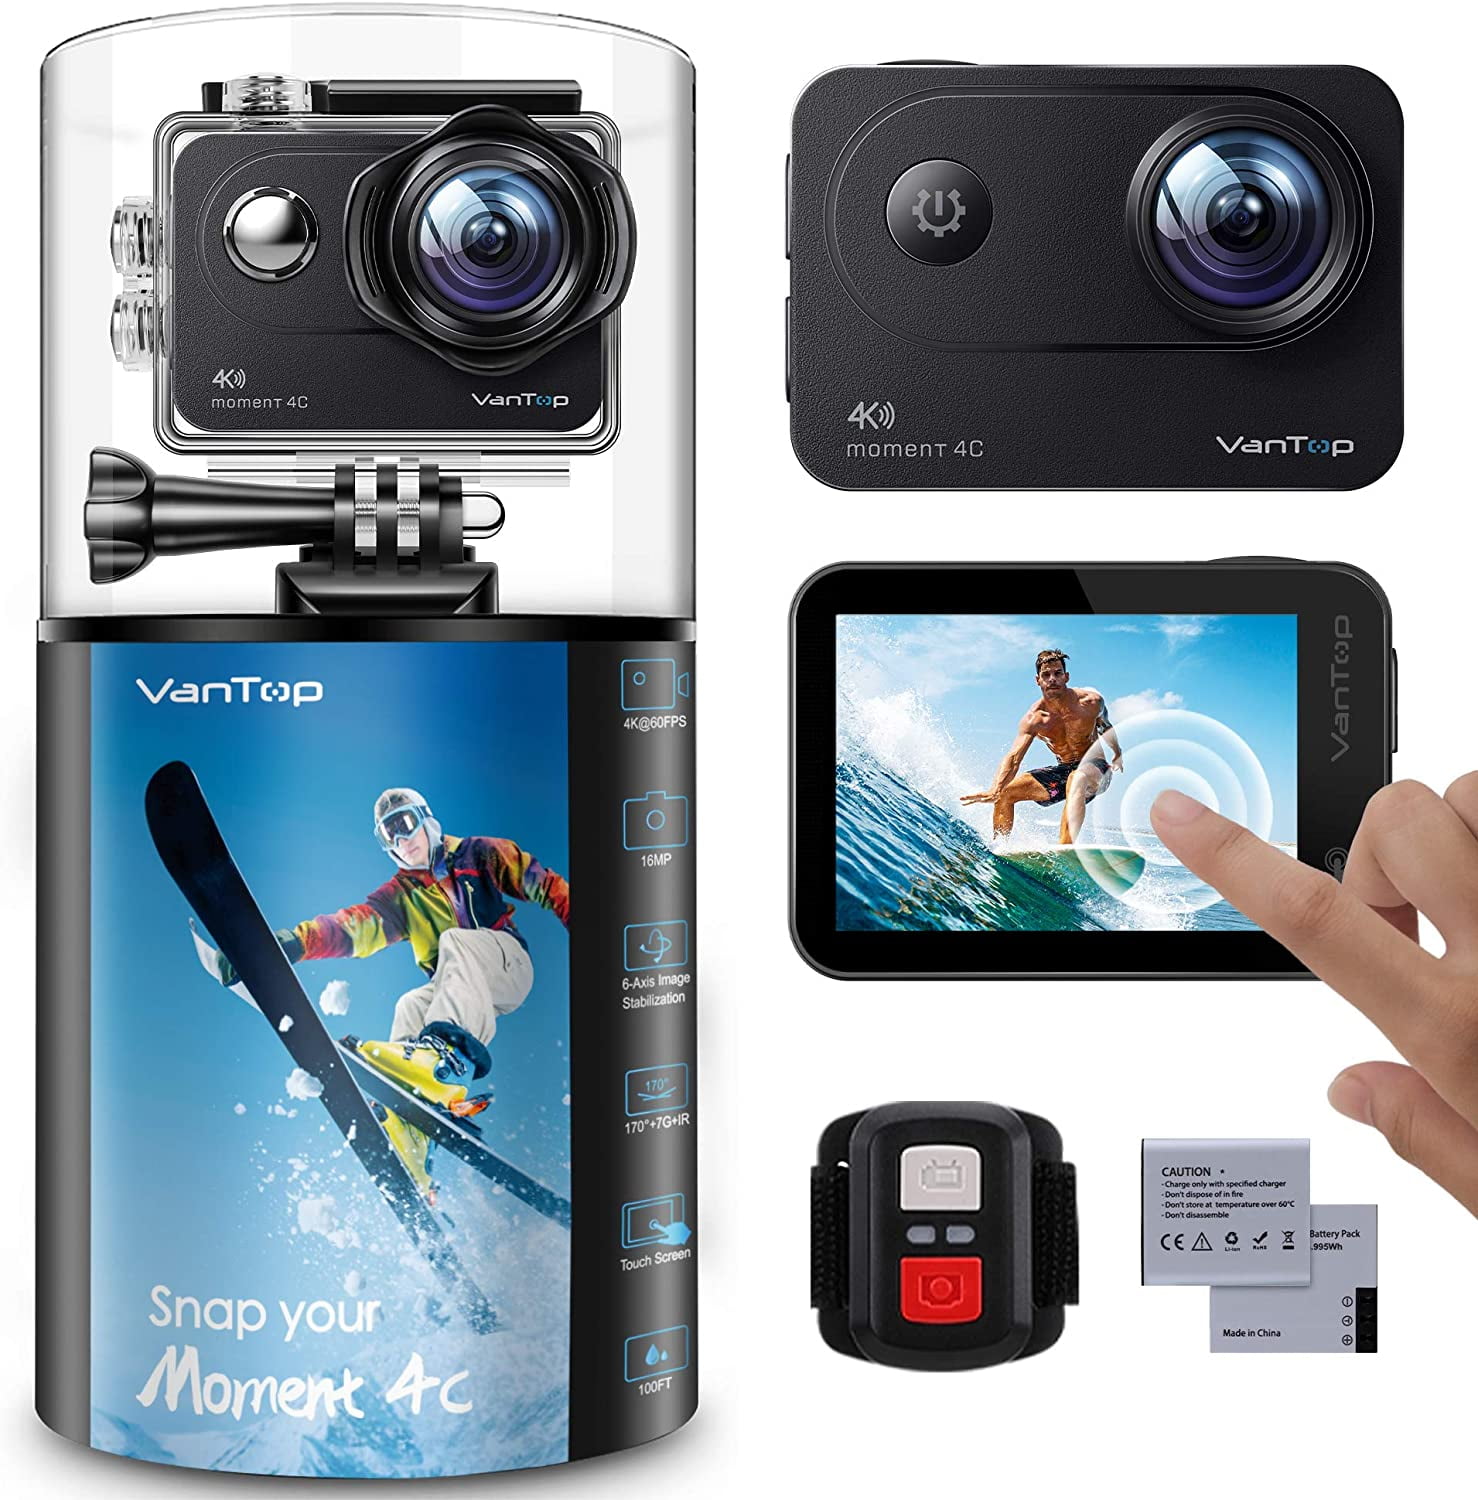 Action Camera 4k 60fps Go Pro, 4k Sport Camera Go Pro